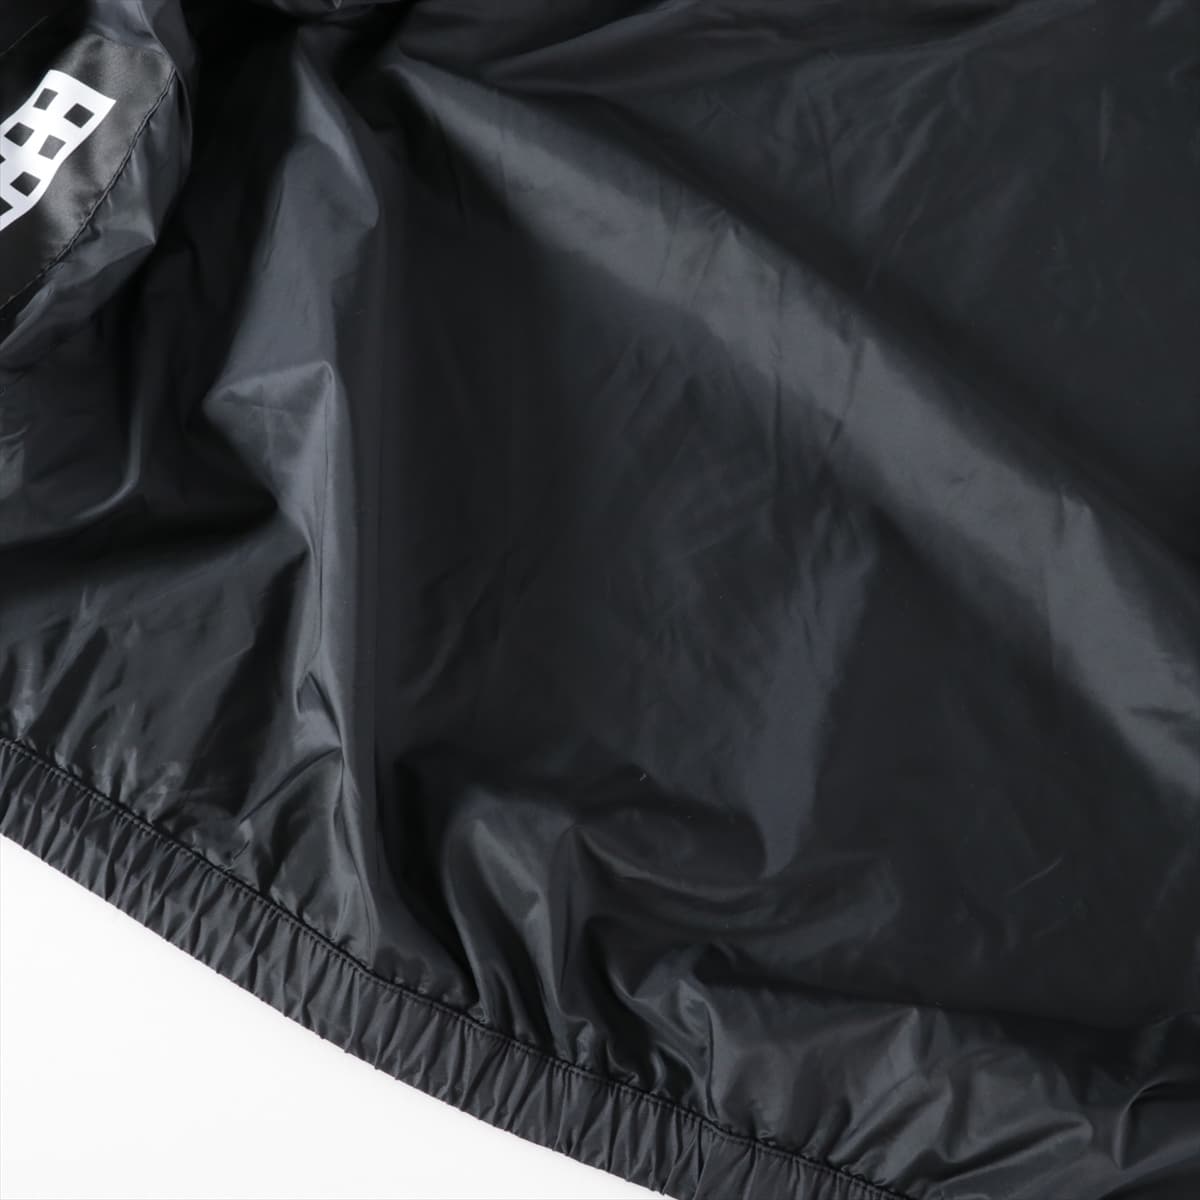 Moncler Genius Fragment HIKARU 20 years Nylon Nylon jacket 0 Men's Black  THUNDERBOLT PROJECT